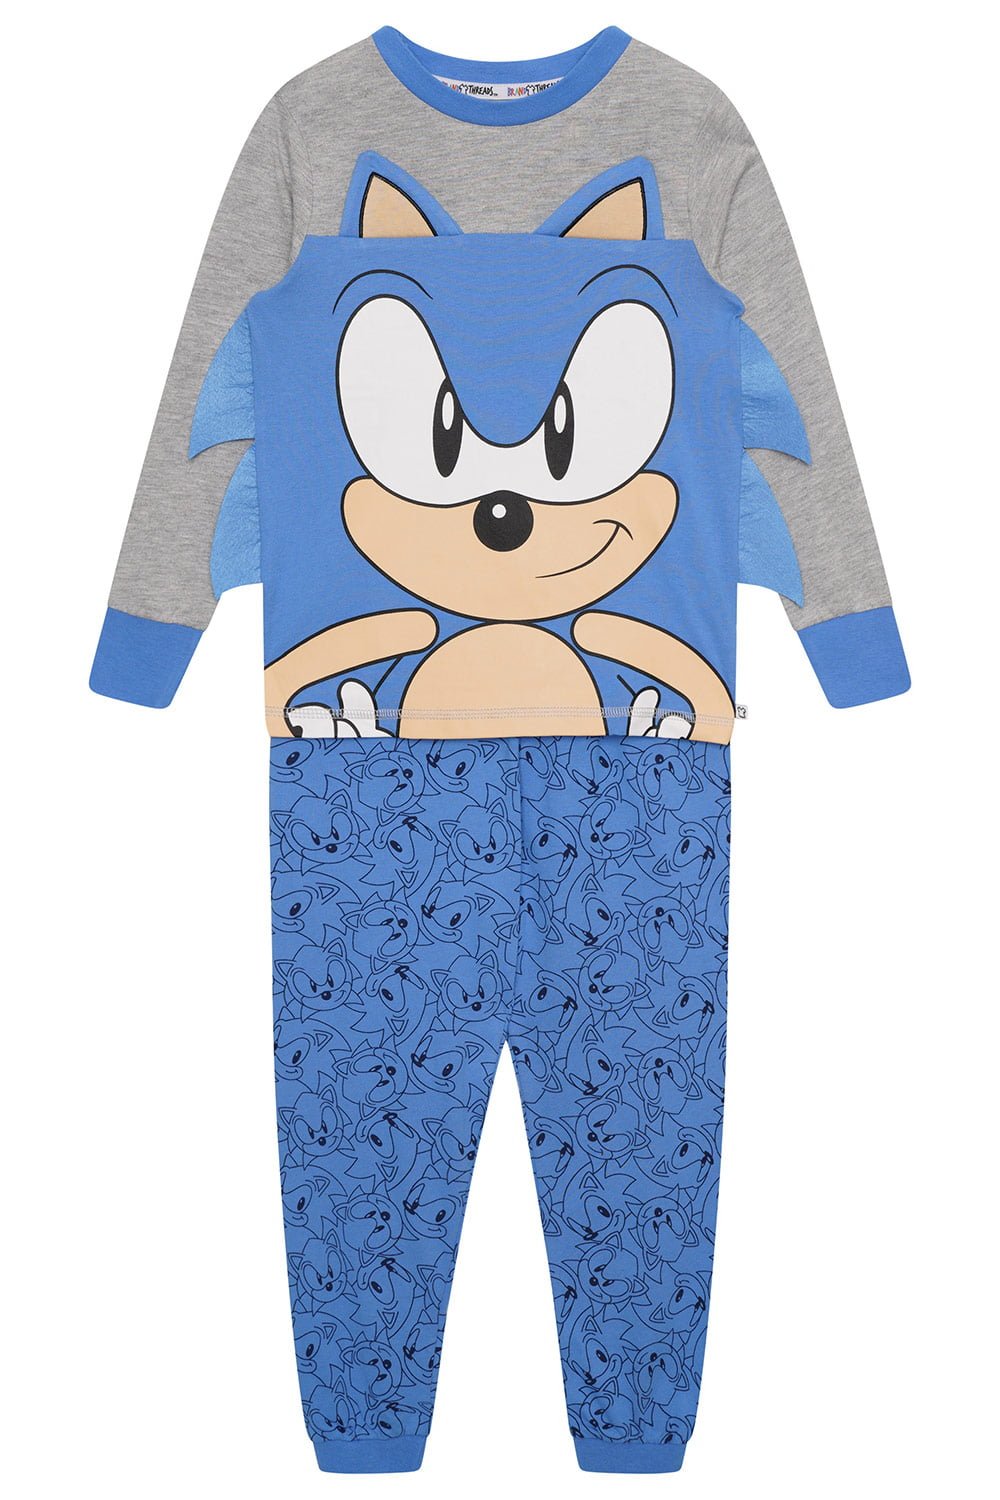 Brand Threads Kids' Sonic the Hedgehog Fleece Pyjamas, Blue/Multi